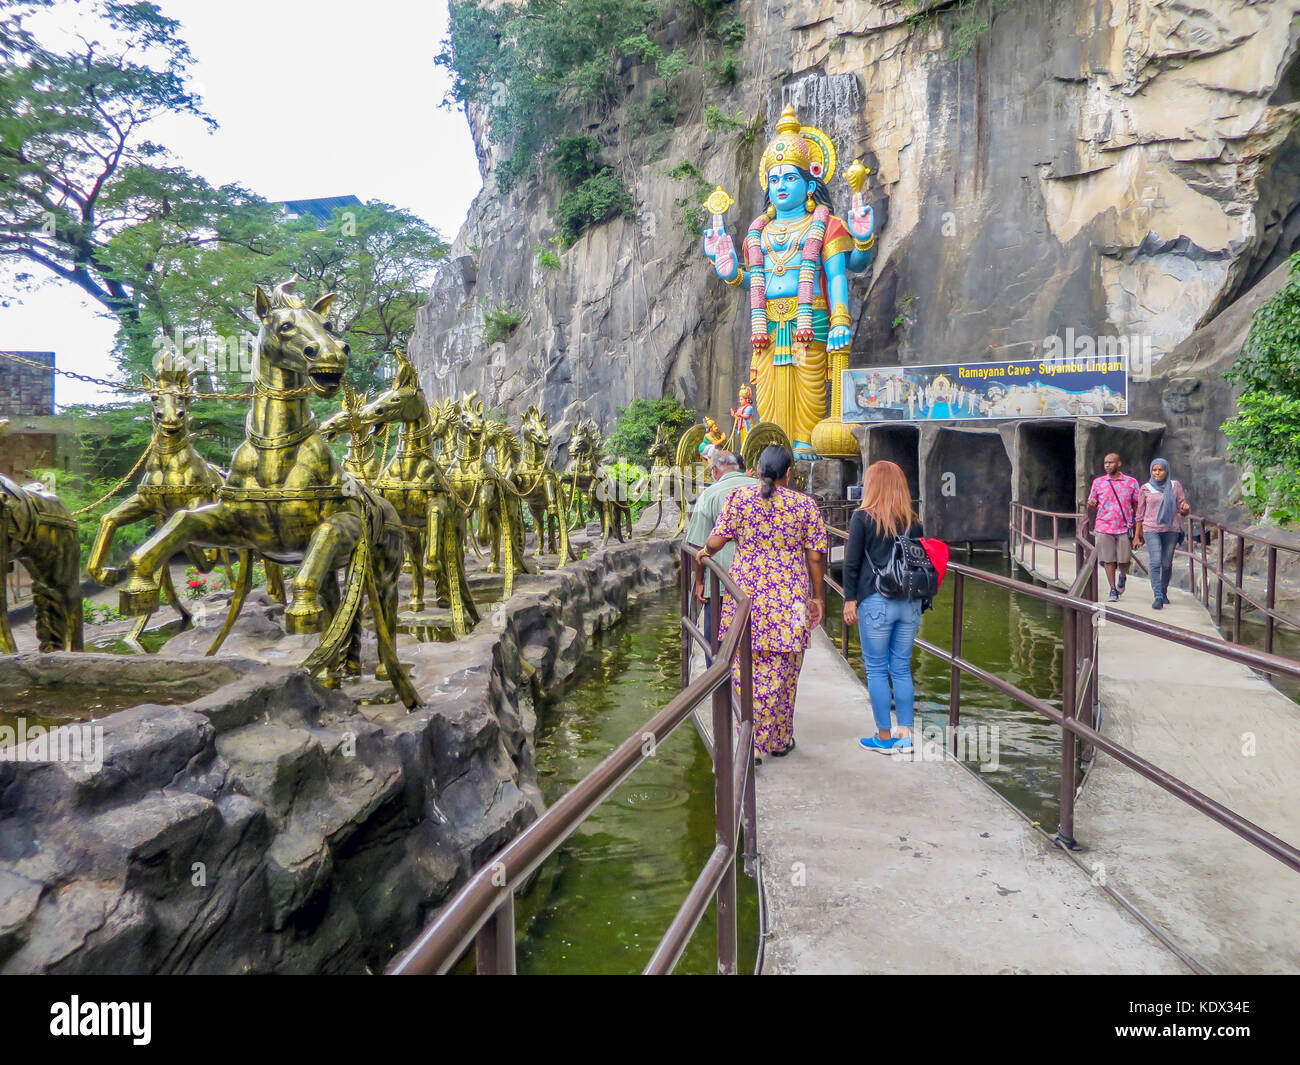 Ramayana Cave at Batu Cave Complex - bronze horses pull a chariot containing the Hindu God Vishnu, Gombek, Selangor, Malaysia. Stock Photo